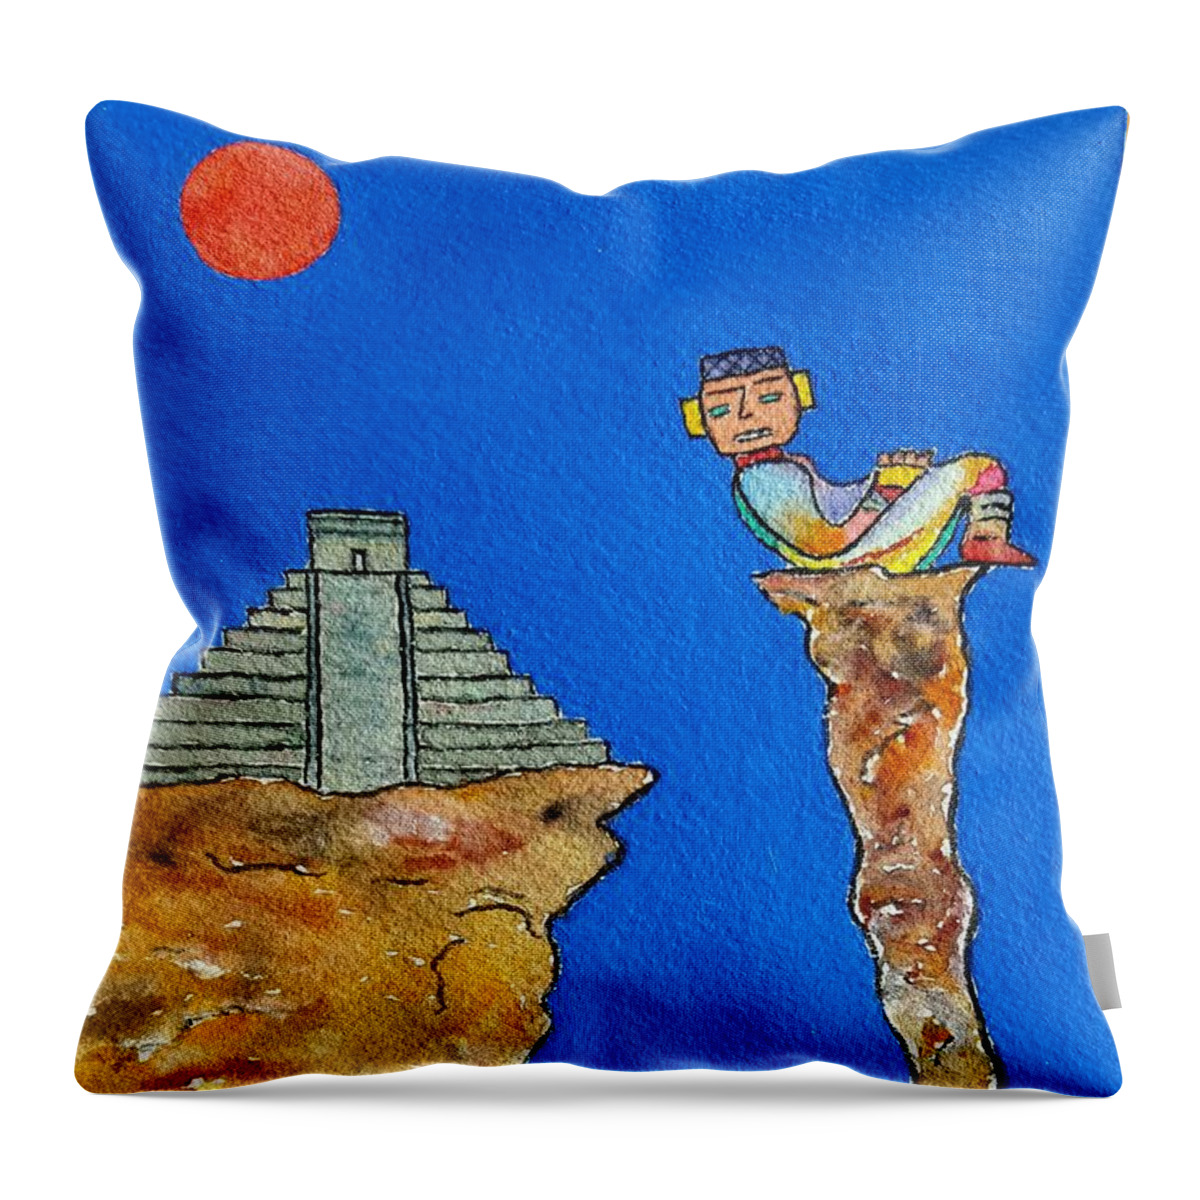 Watercolor Throw Pillow featuring the painting Mayan Sun Lore by John Klobucher